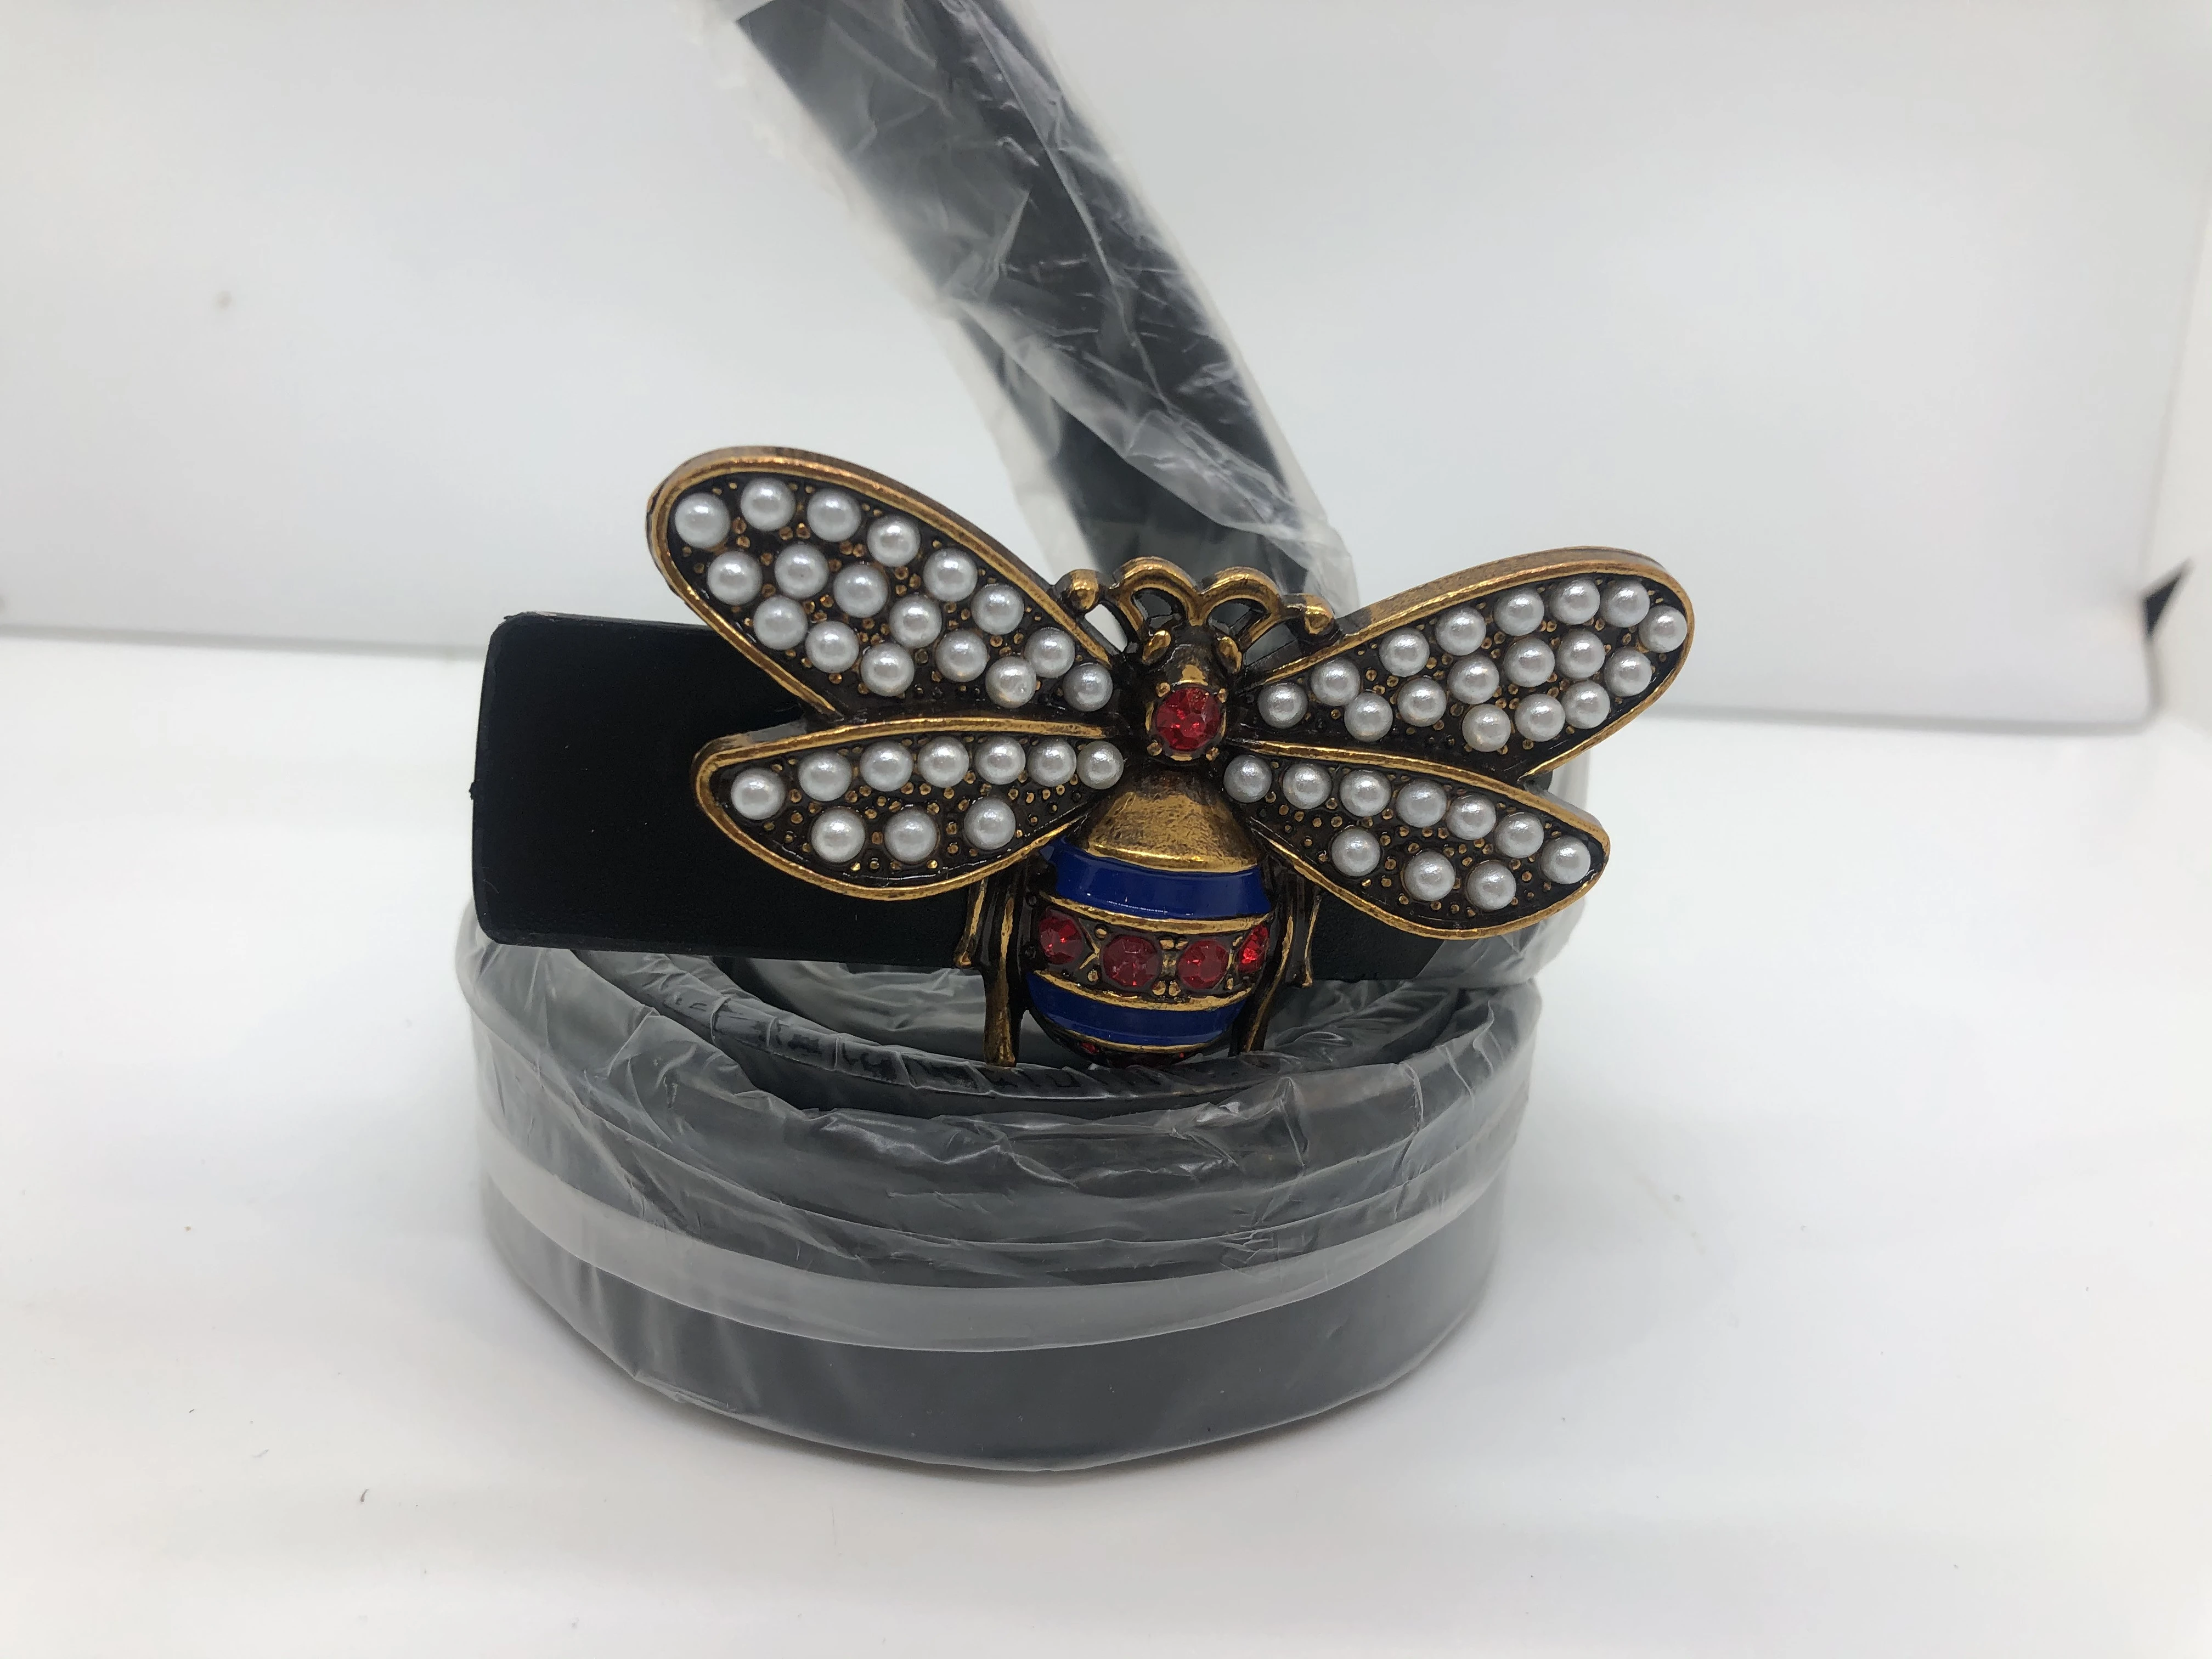 Black Gucci women's belt, colorful butterfly buckle, branded logo